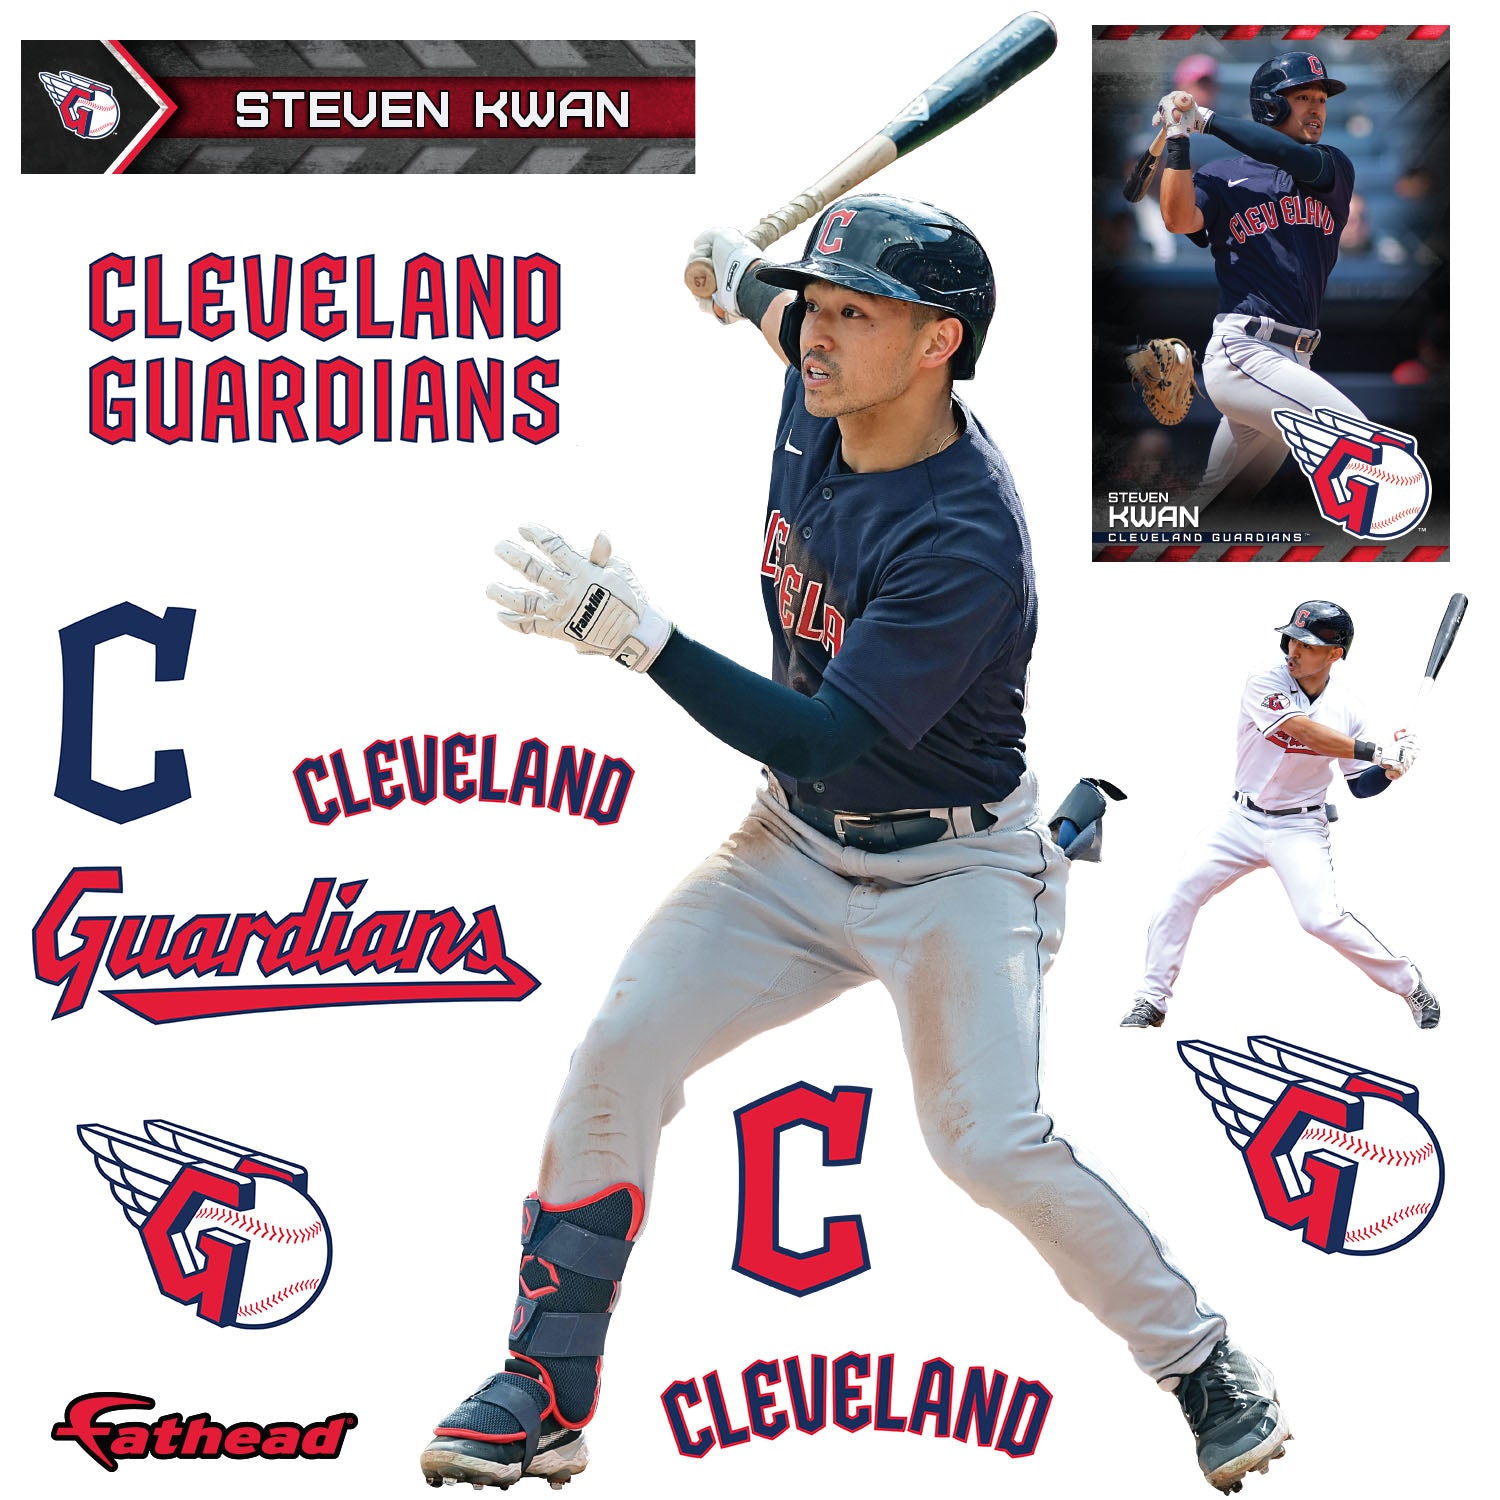 Steven Kwan Cleveland Guardians Indians Signed Autographed 8x10 Photo